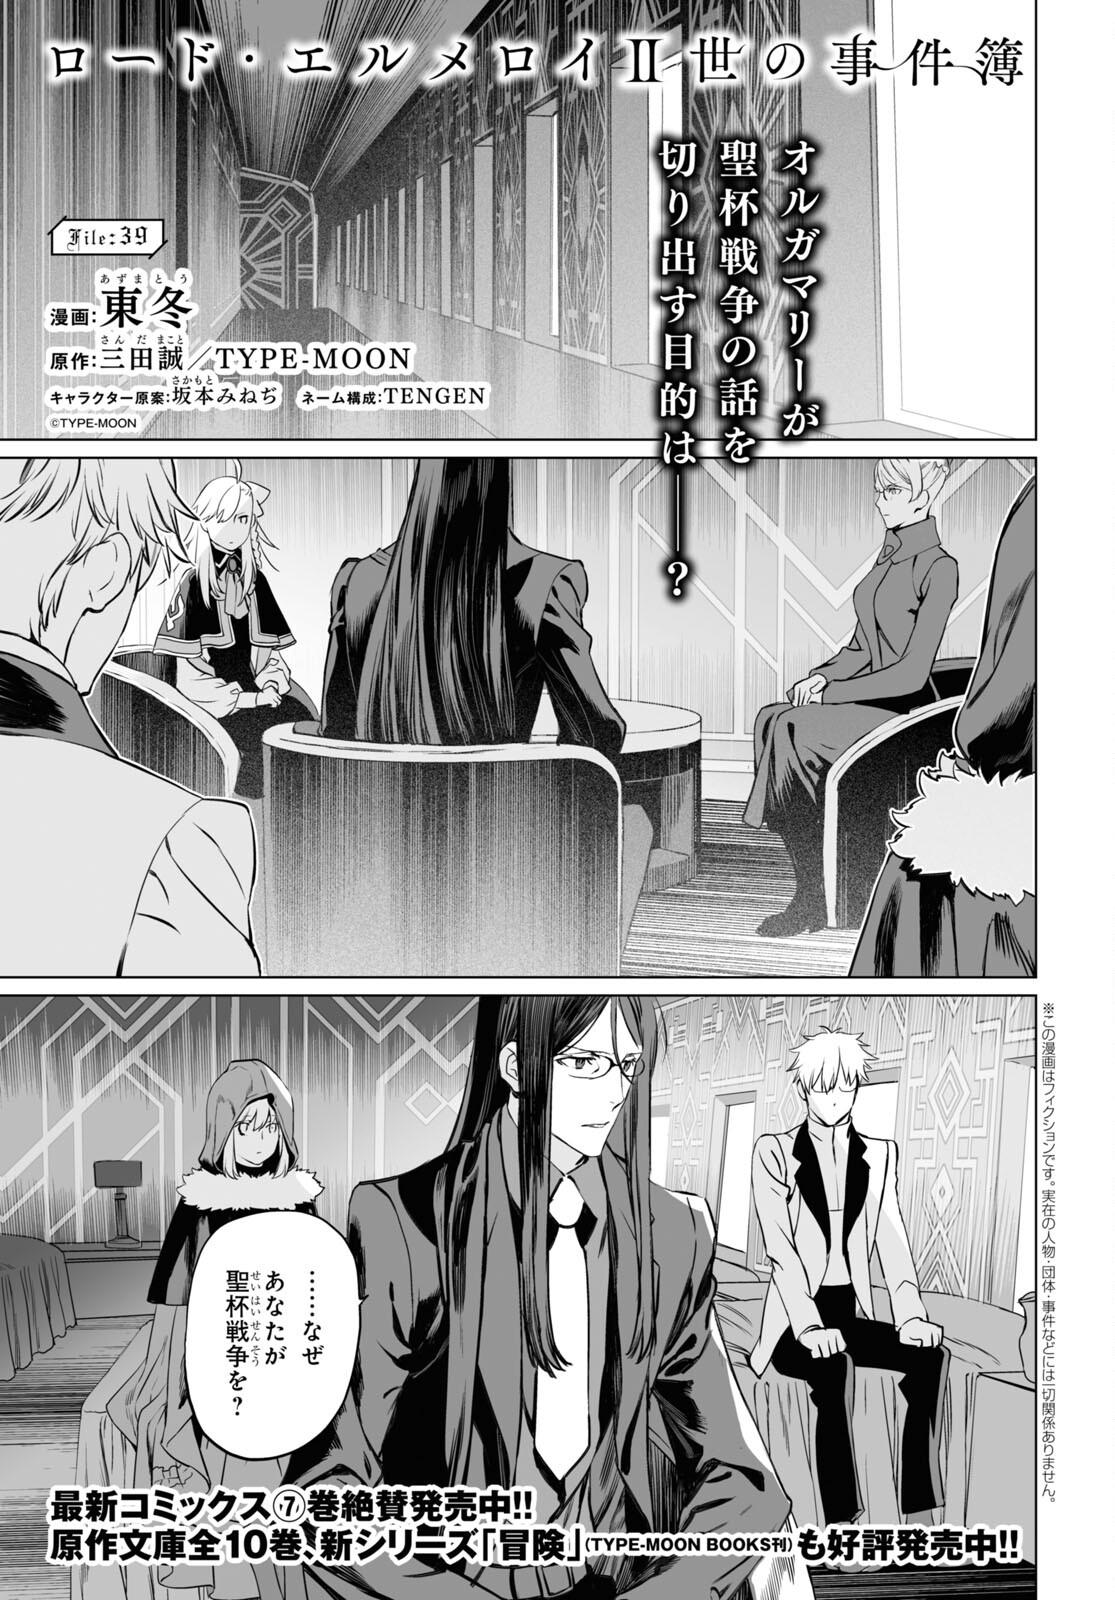 Lord El-Melloi II-sei no Jikenbo - Chapter 39 - Page 1